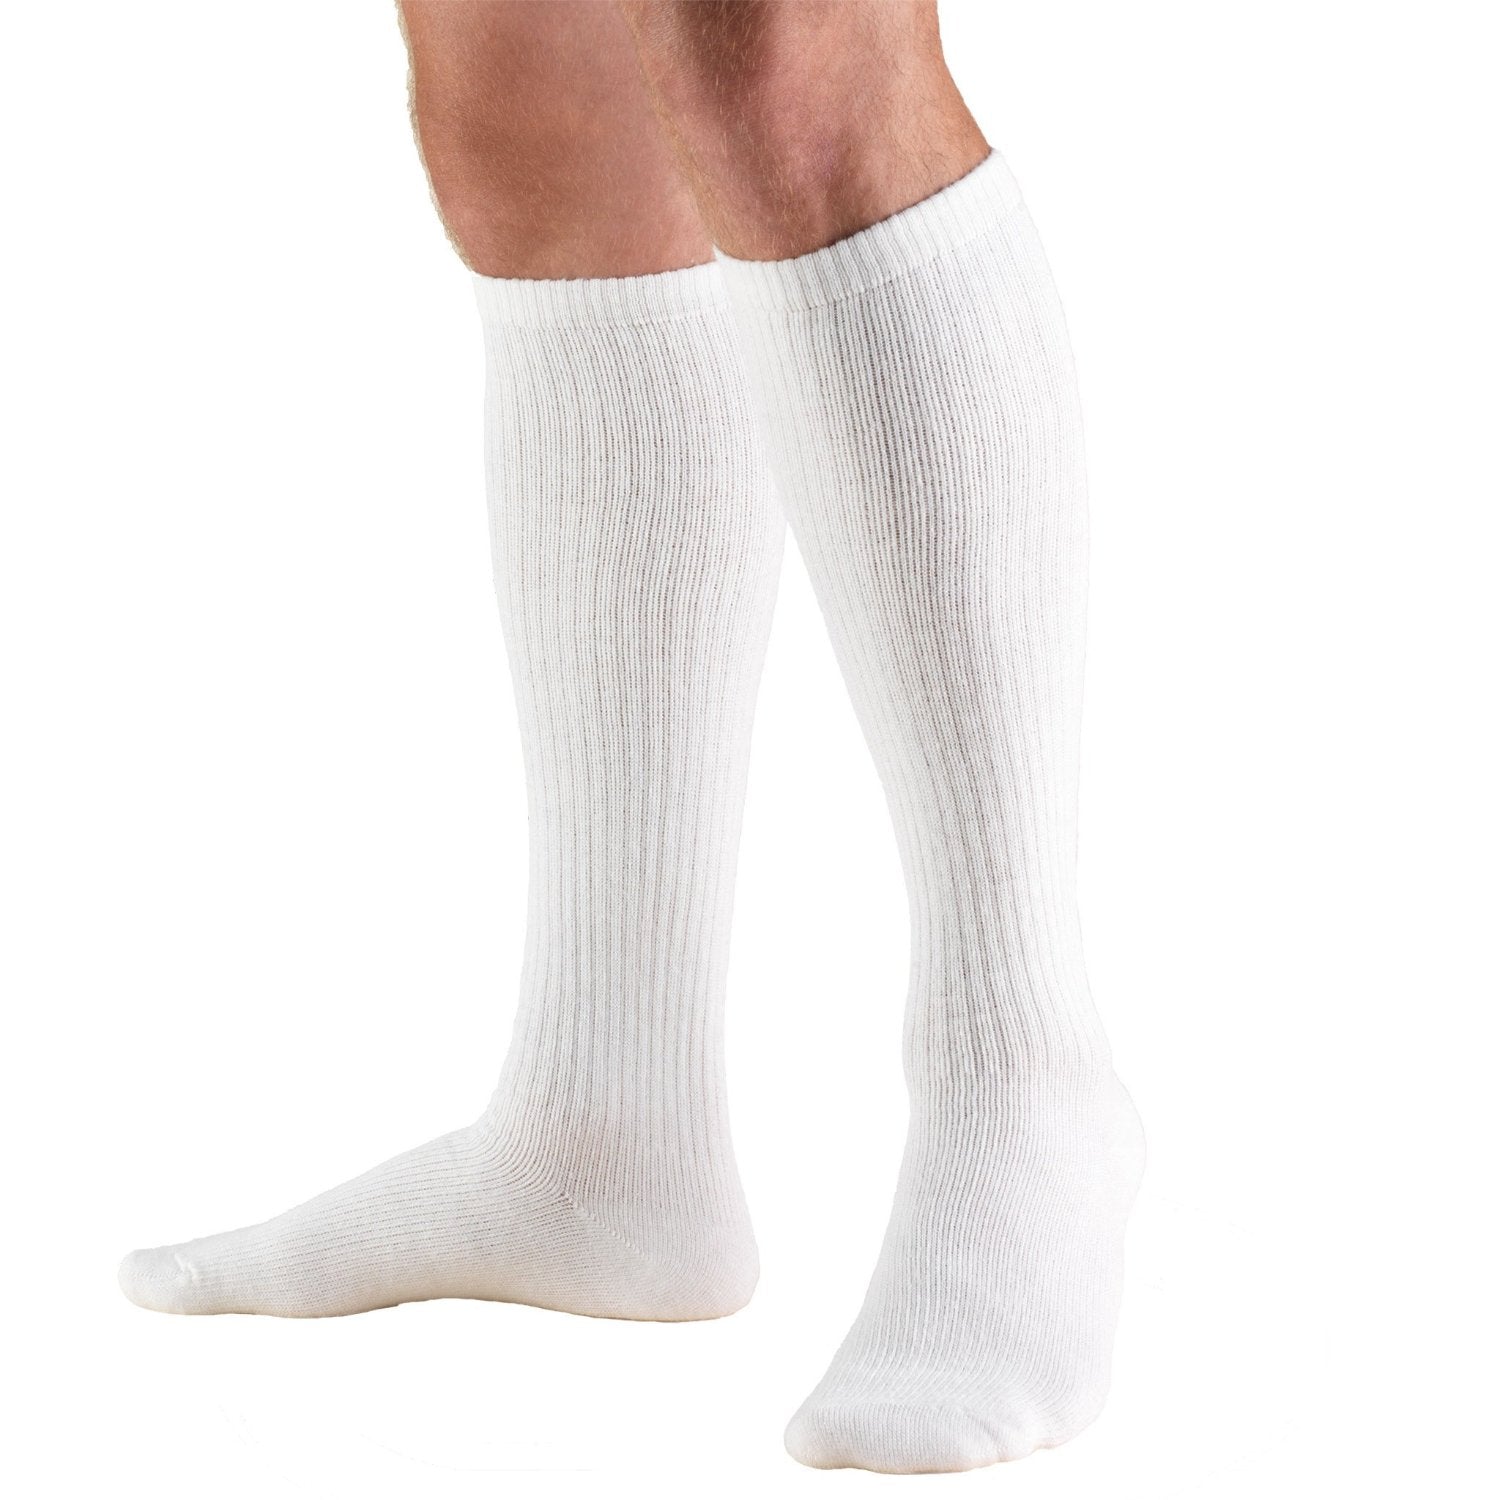 1913 Truform, Diabetic Compression Socks, 8-15 mmHg, Knee High, Cushion Foot, - Midwest DME Supply